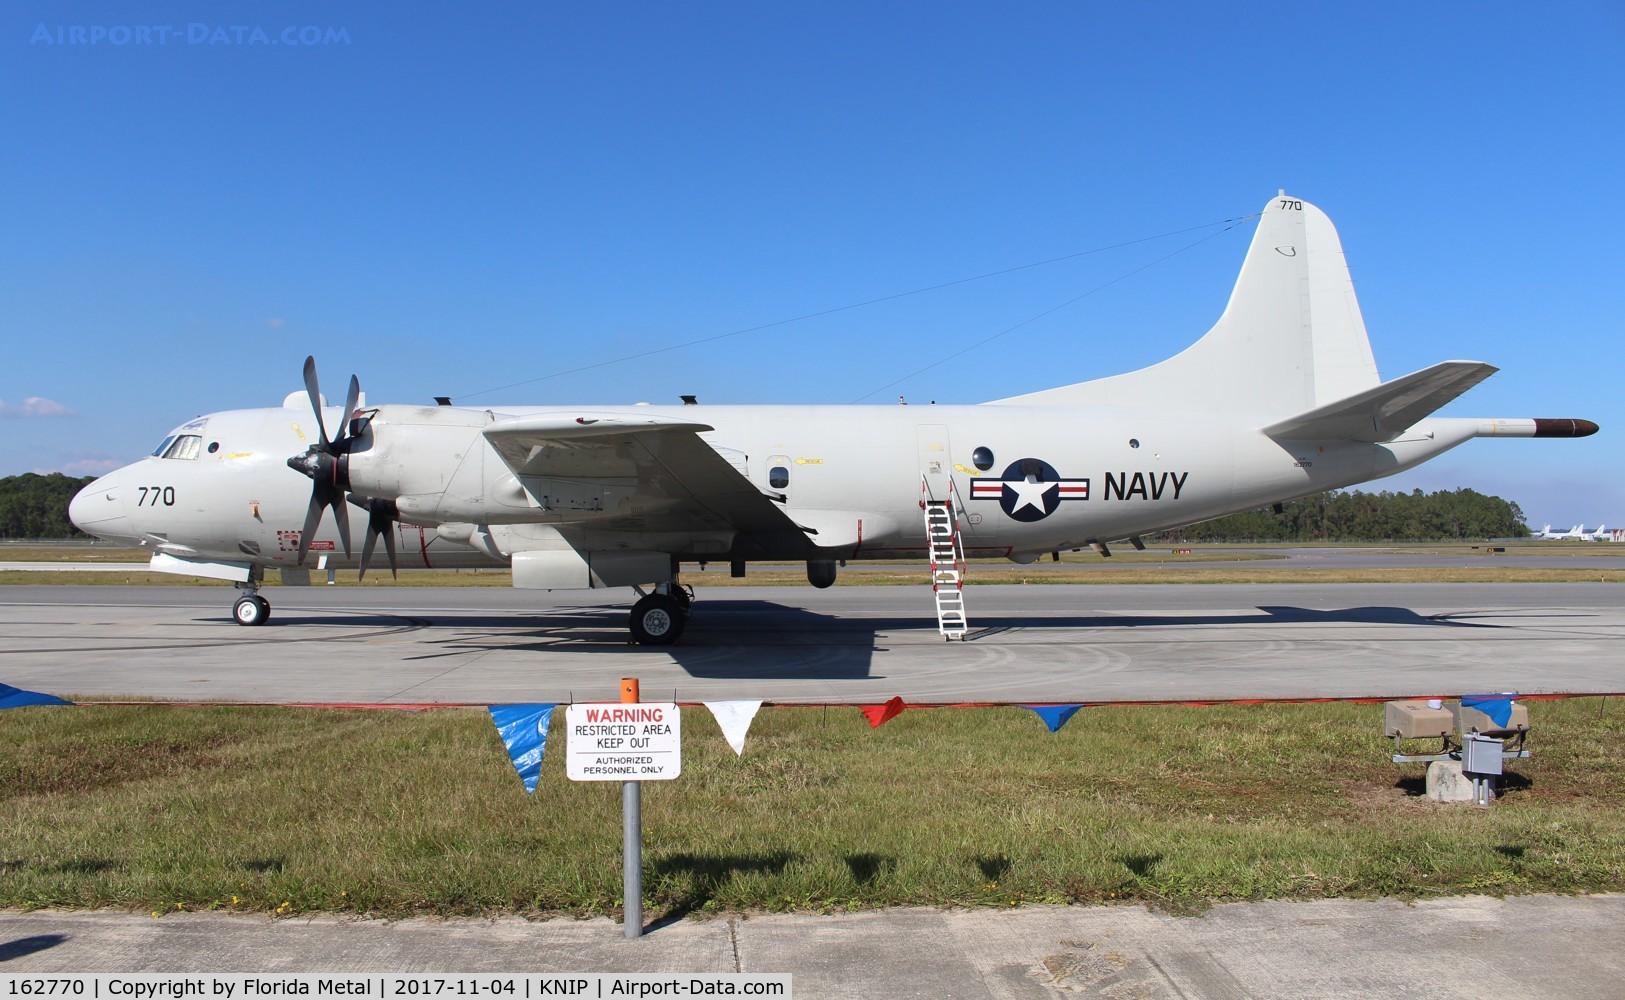 162770, Lockheed P-3C Orion C/N 285G-5796, P-3 zx